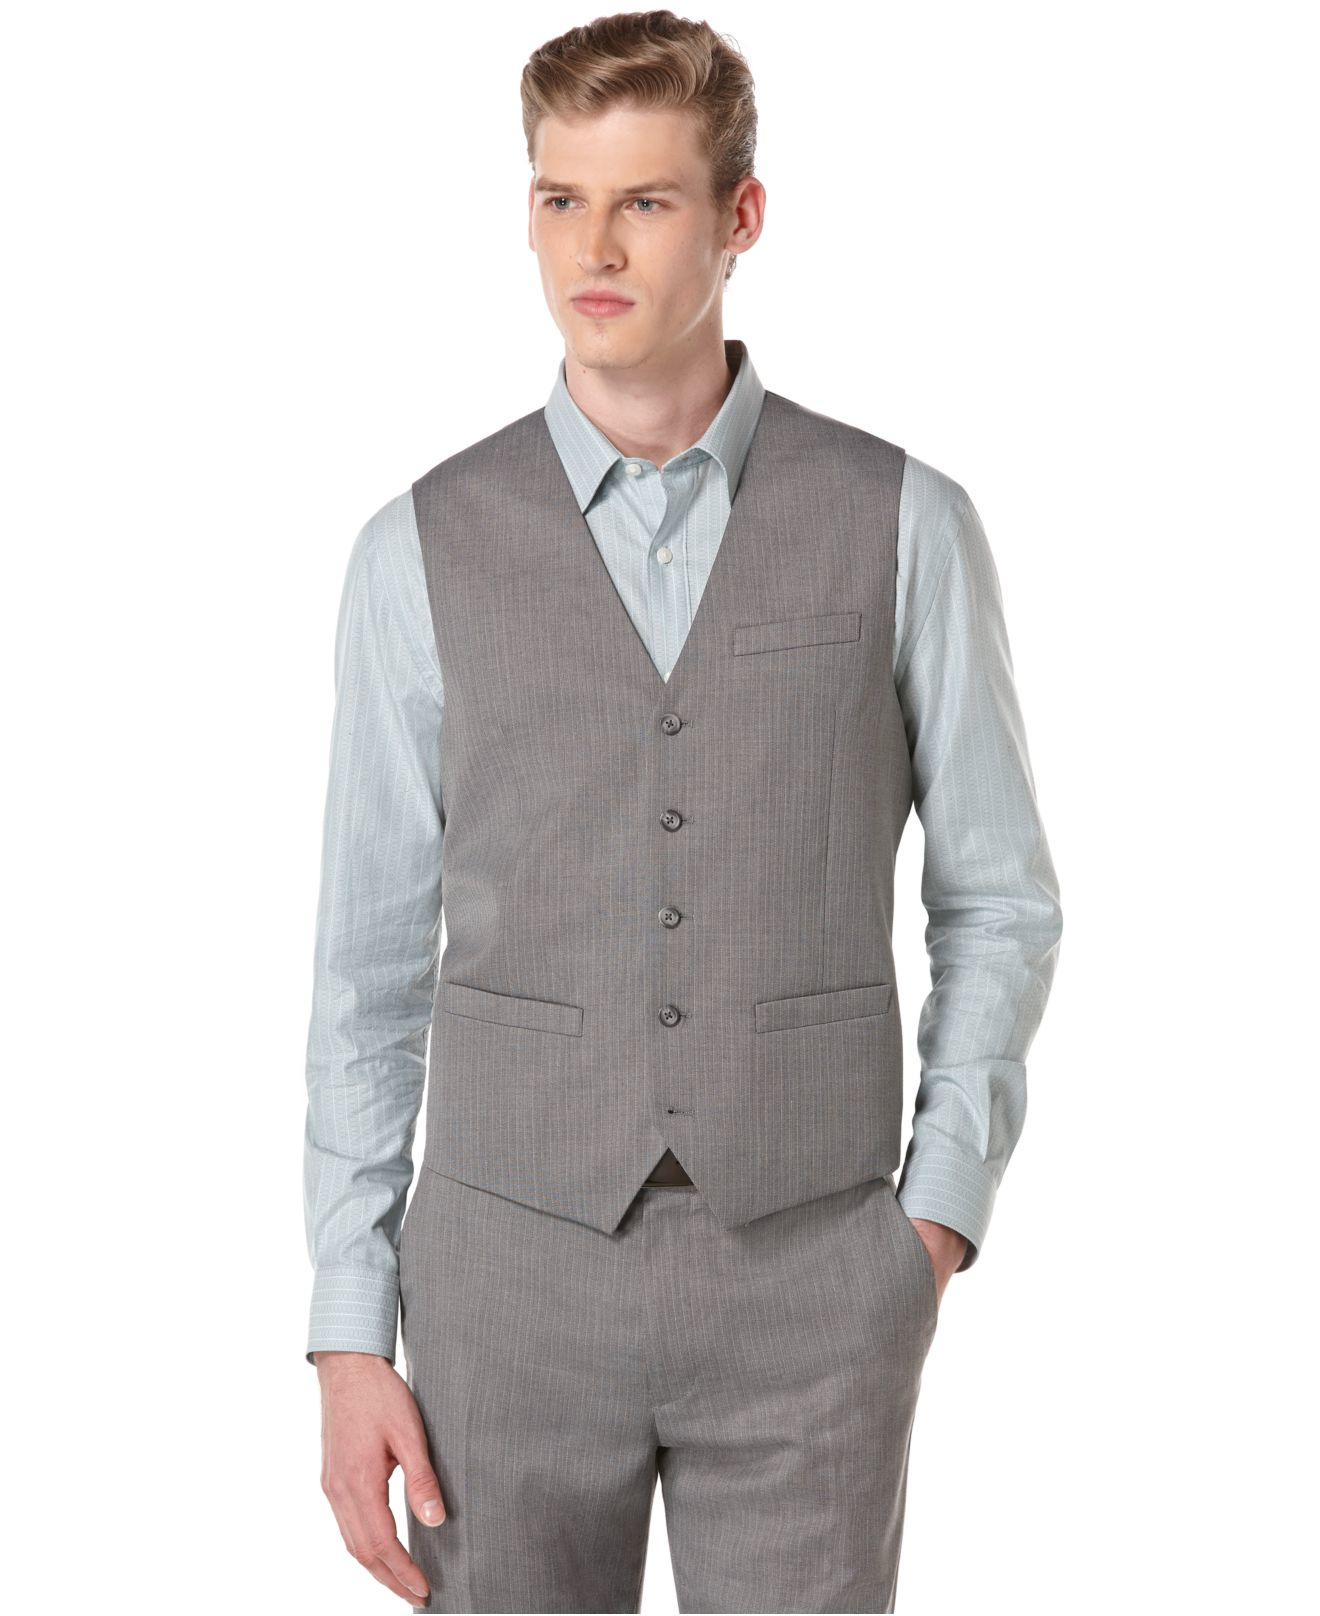 Lyst - Perry Ellis Gray Herringbone Striped Suit Vest in Gray for Men